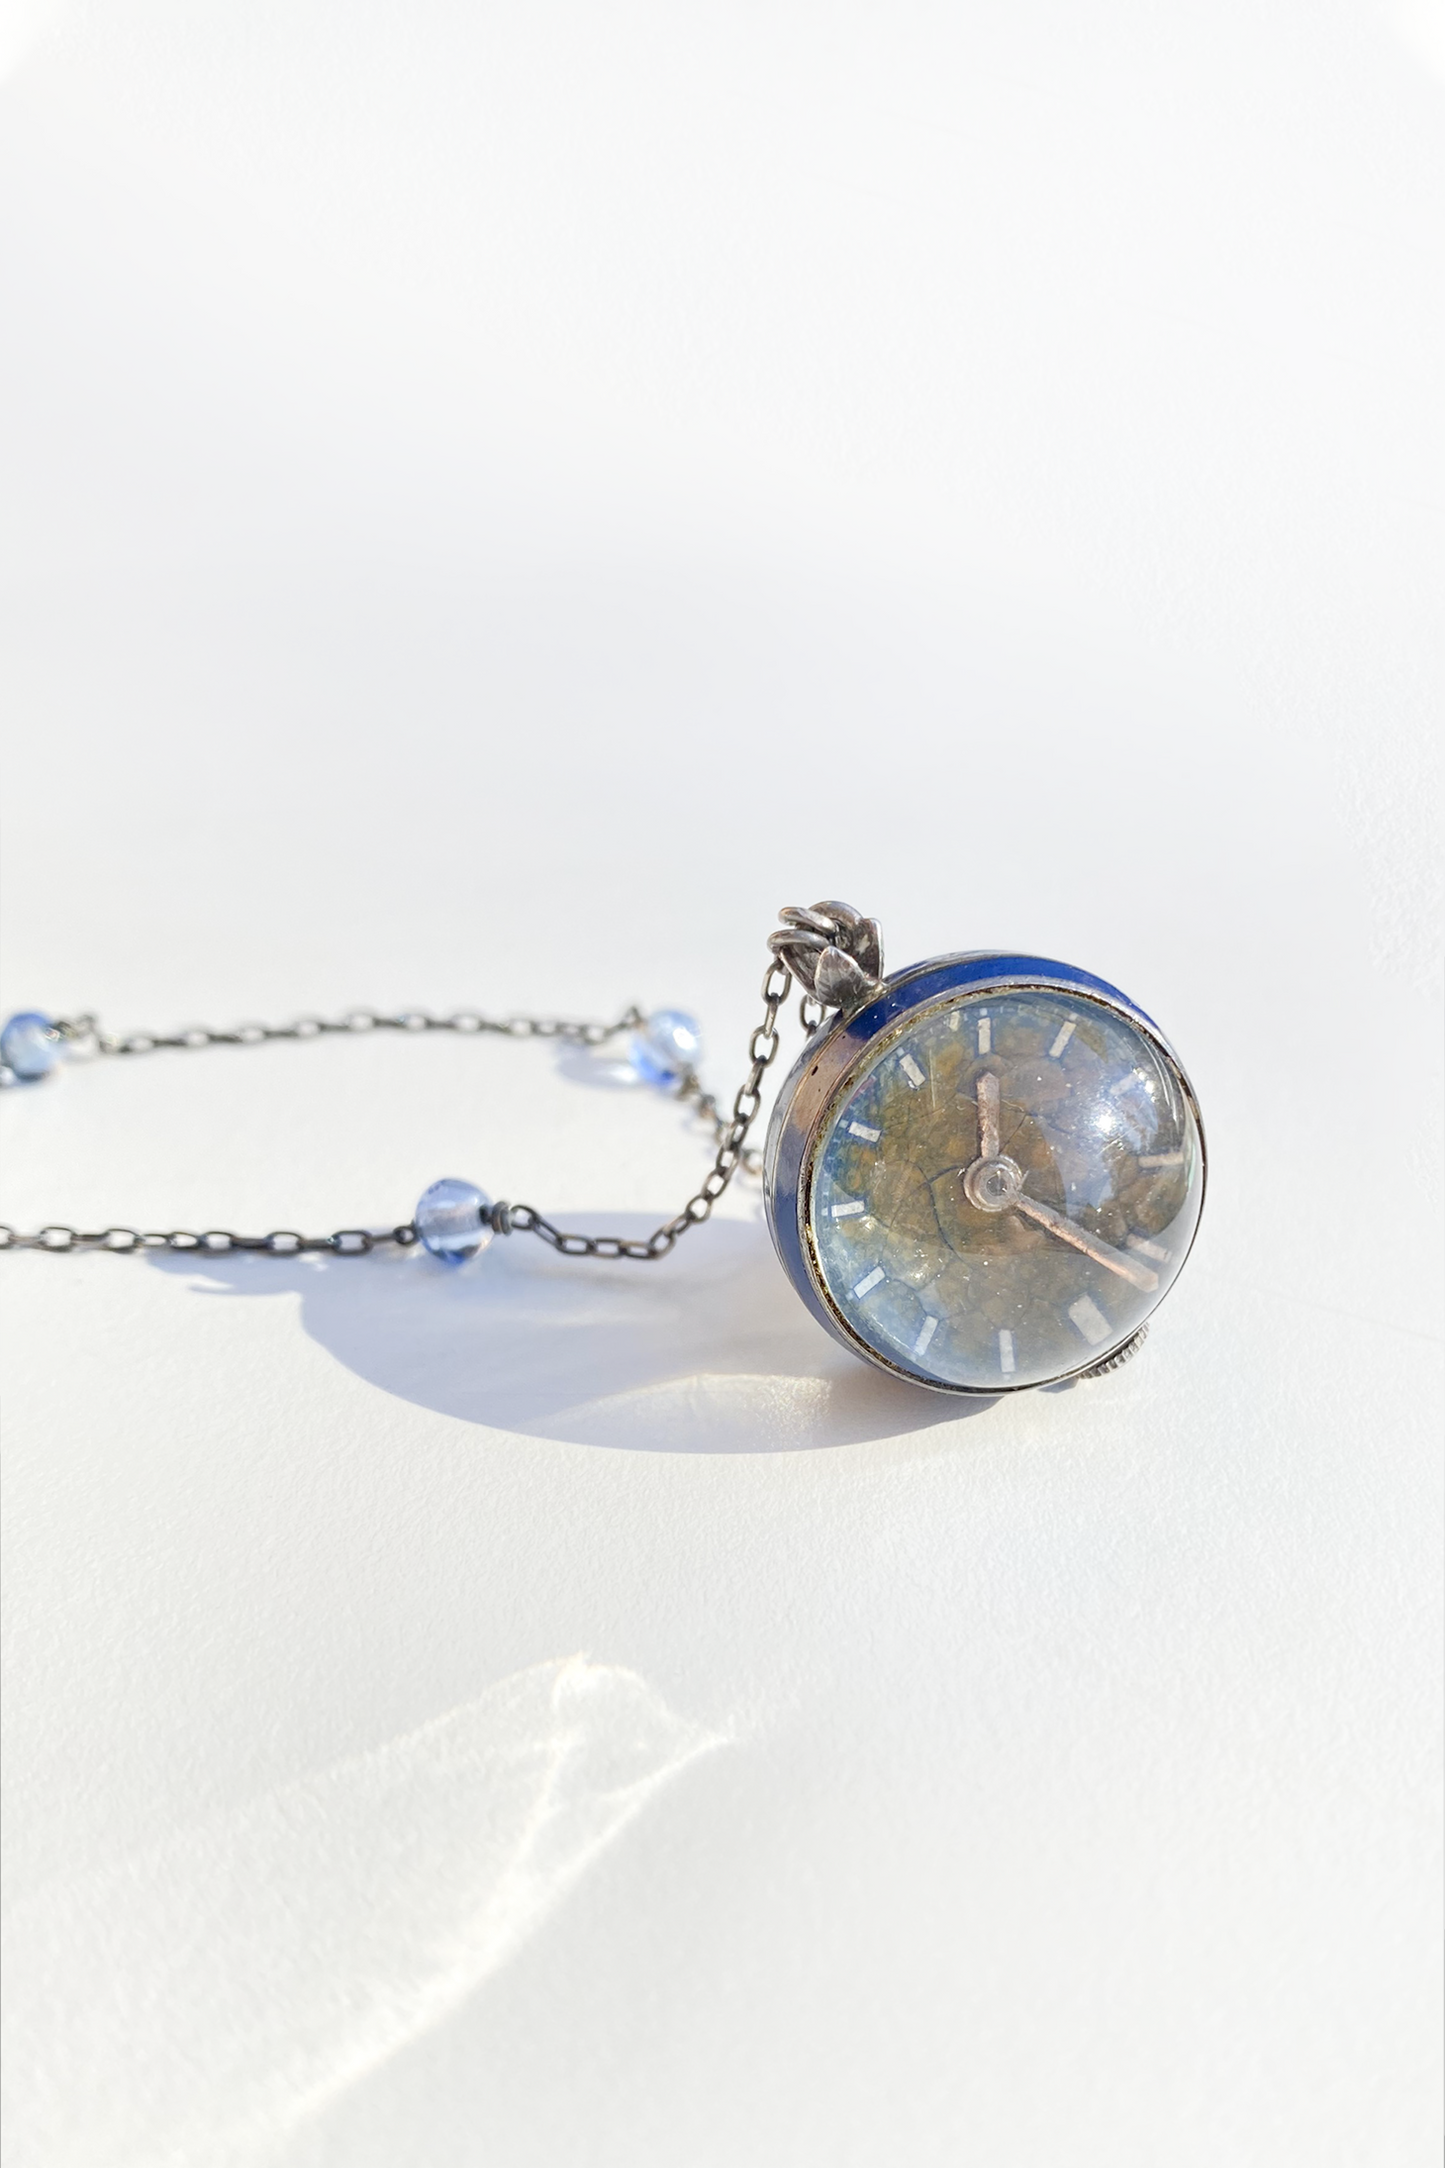 Art Deco Enamel Watch Necklace